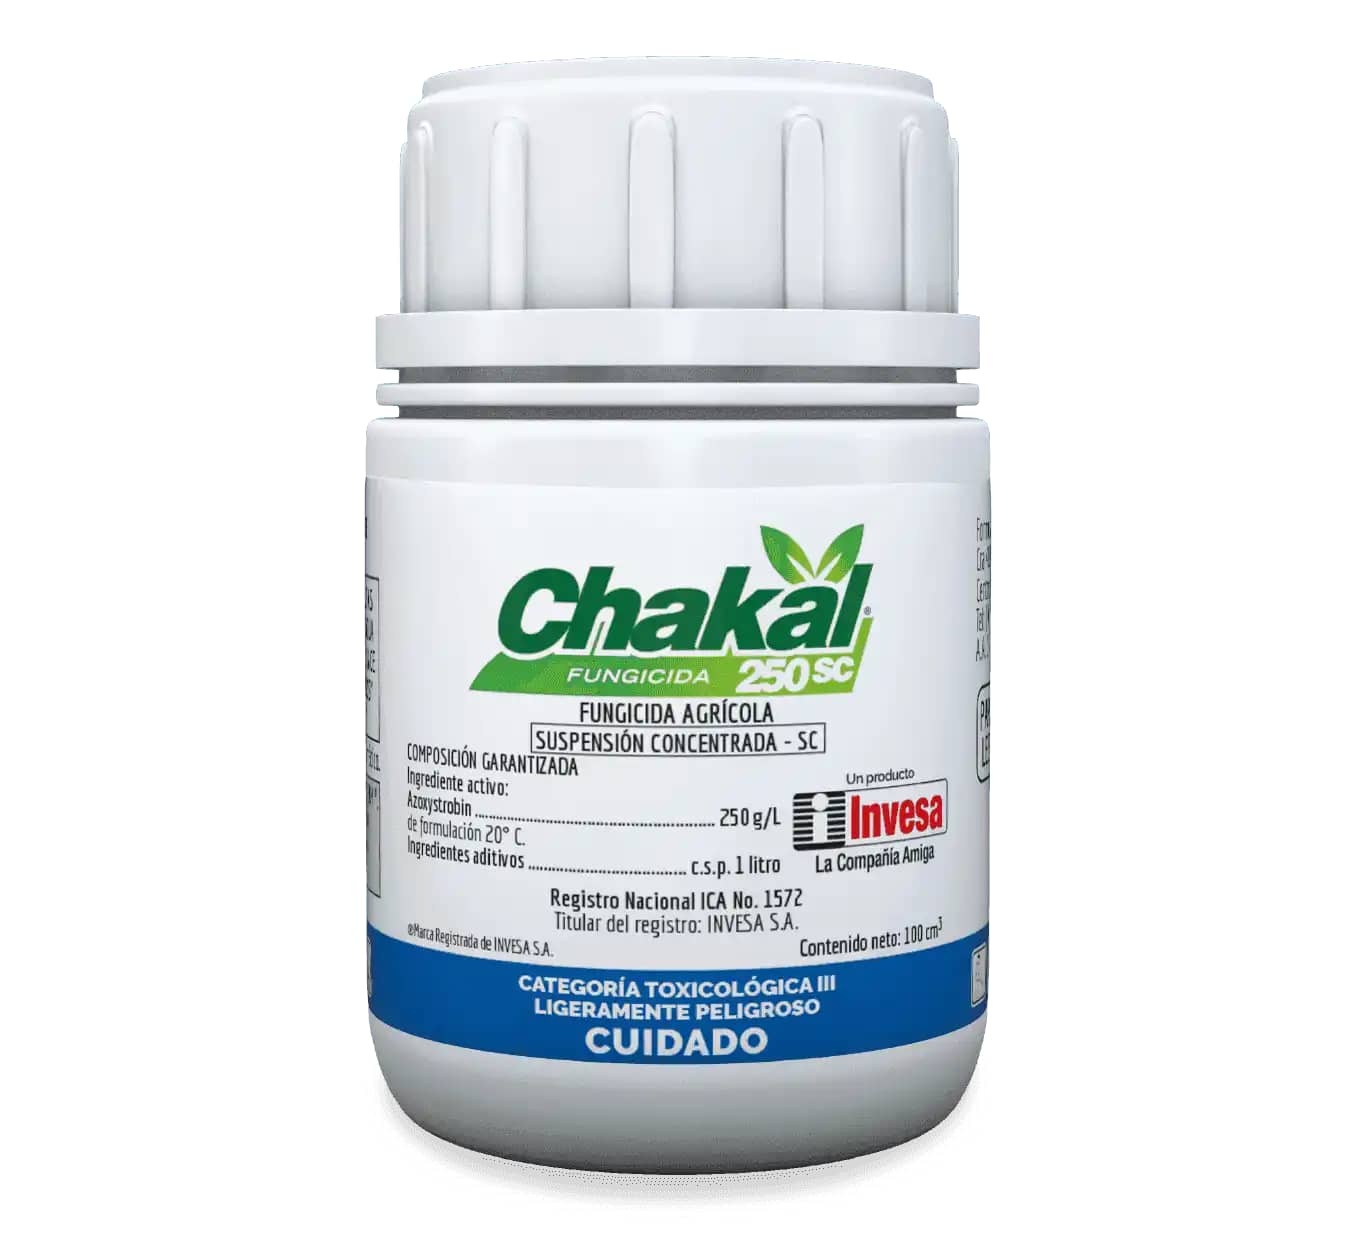 Fungicida Chakal 250 Sc x 100 Cm³